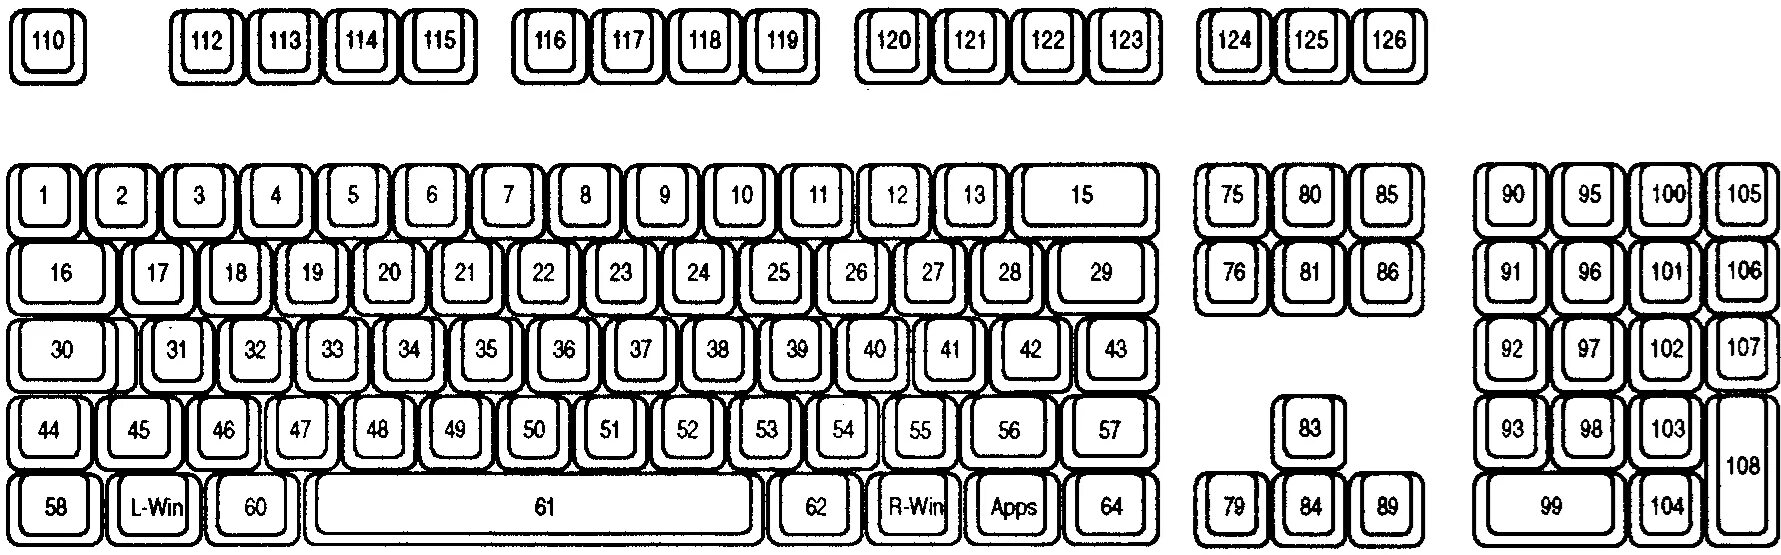 Код нажатых клавиш. Скан коды клавиатуры PS/2. PS/2 клавиатура коды клавиш. Скан-код клавиш клавиатуры. Номера кнопок на клавиатуре.